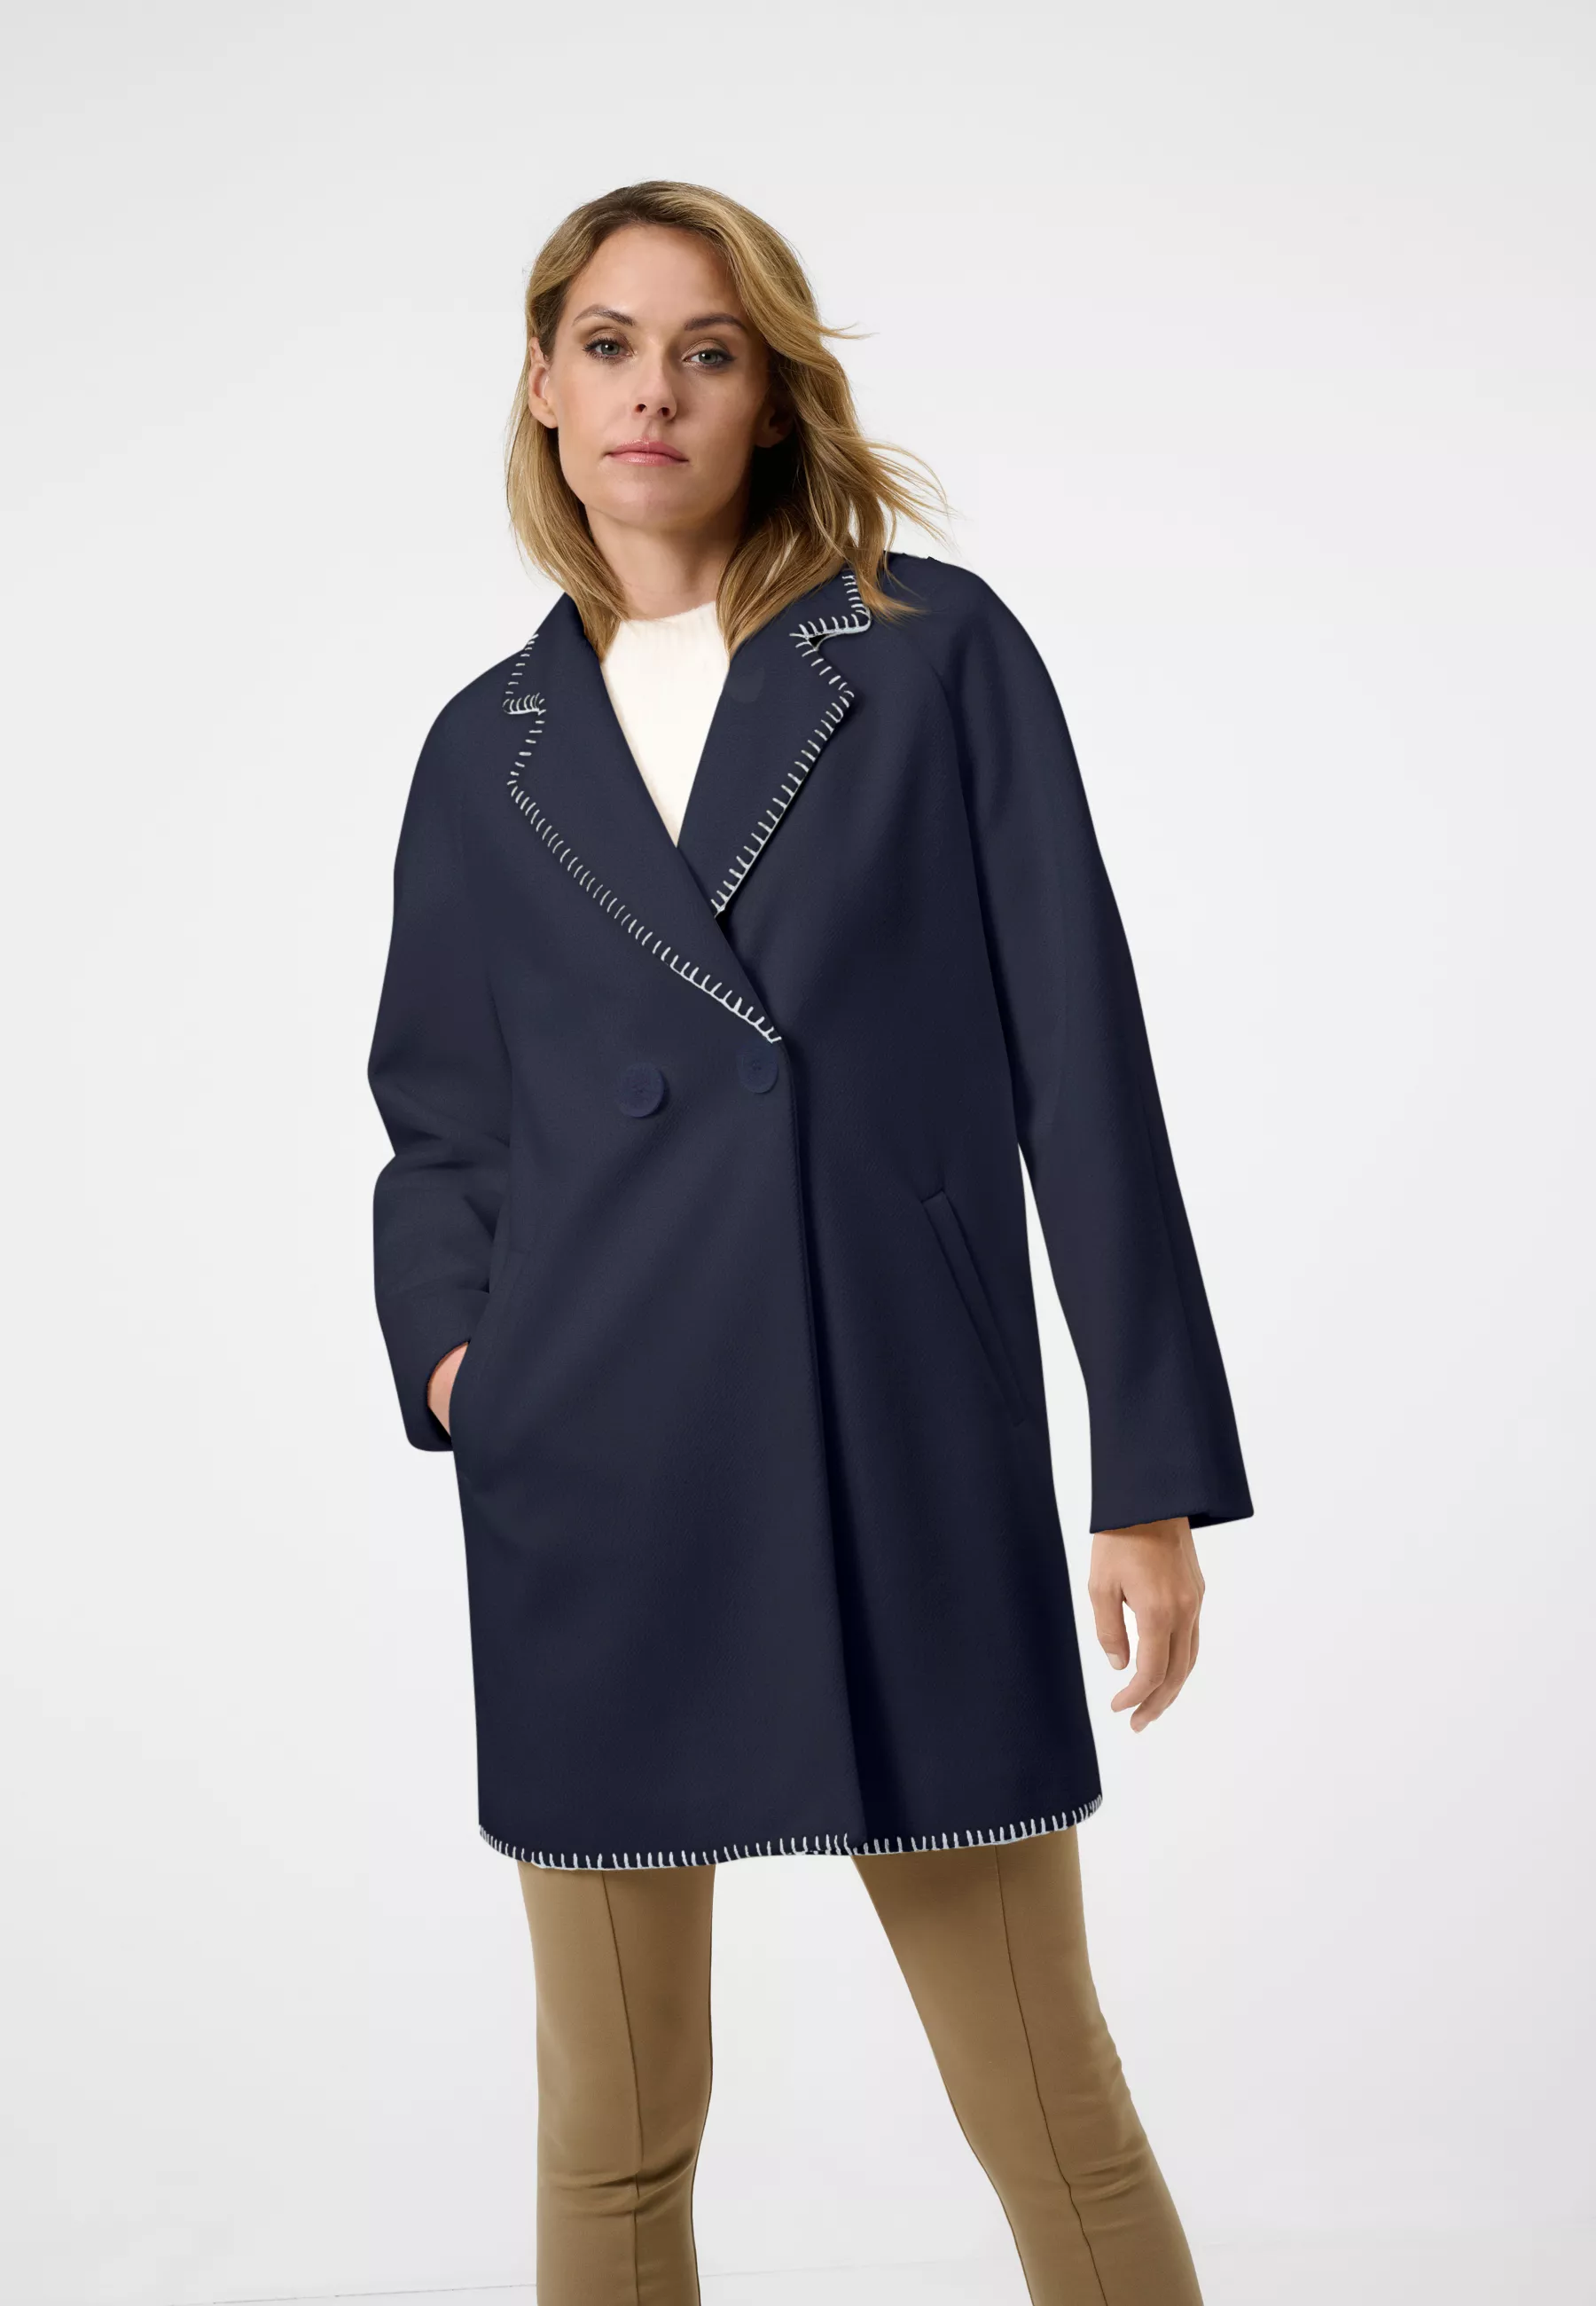 Damen Textil Mantel Silvia in Blau von Ricano, Frontansicht am Model